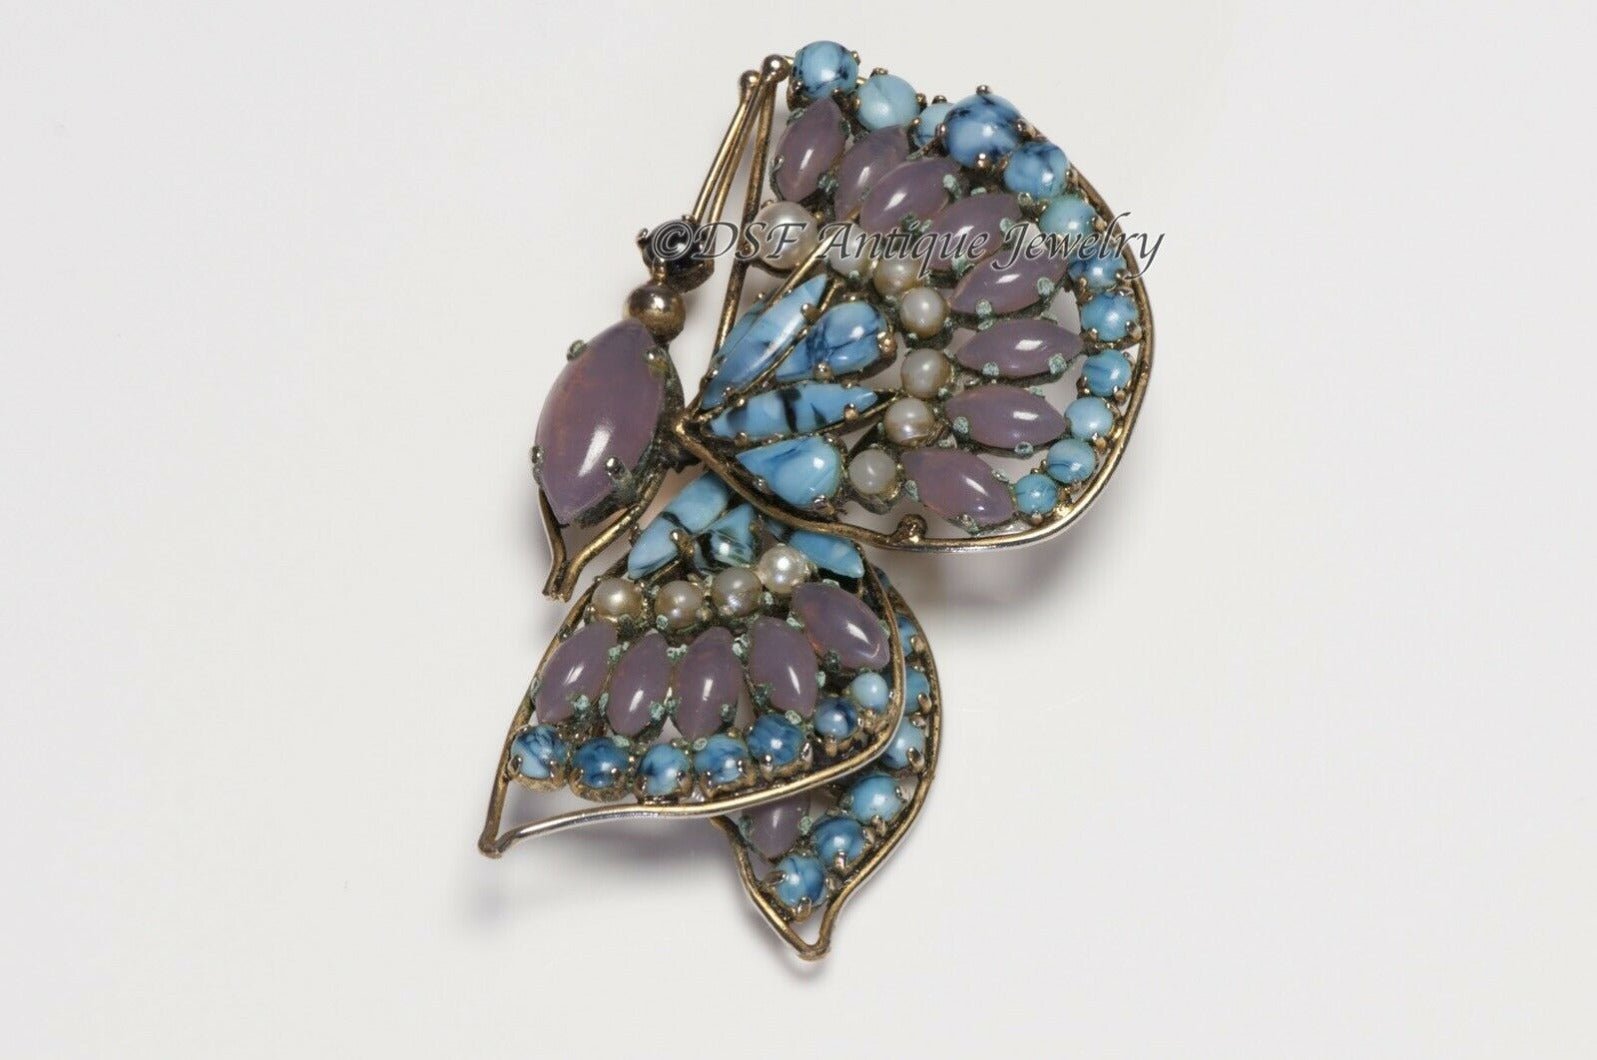 Christian Dior Henkel & Grosse 1964 Blue Pink Glass Faux Pearl Butterfly Brooch